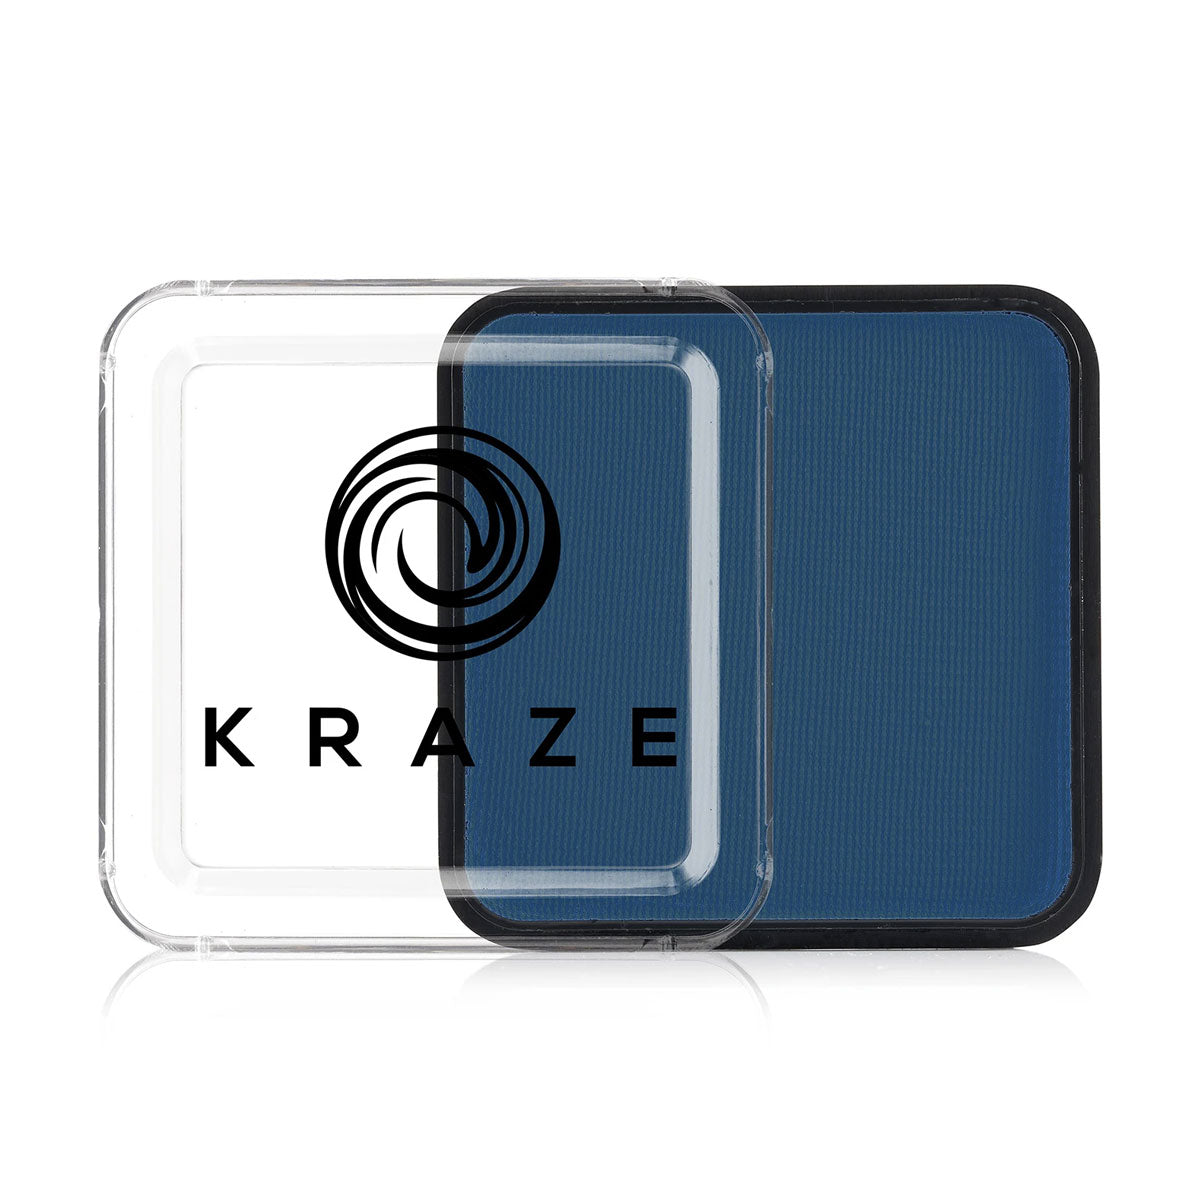 Metallic Blue Square 25g - Kraze